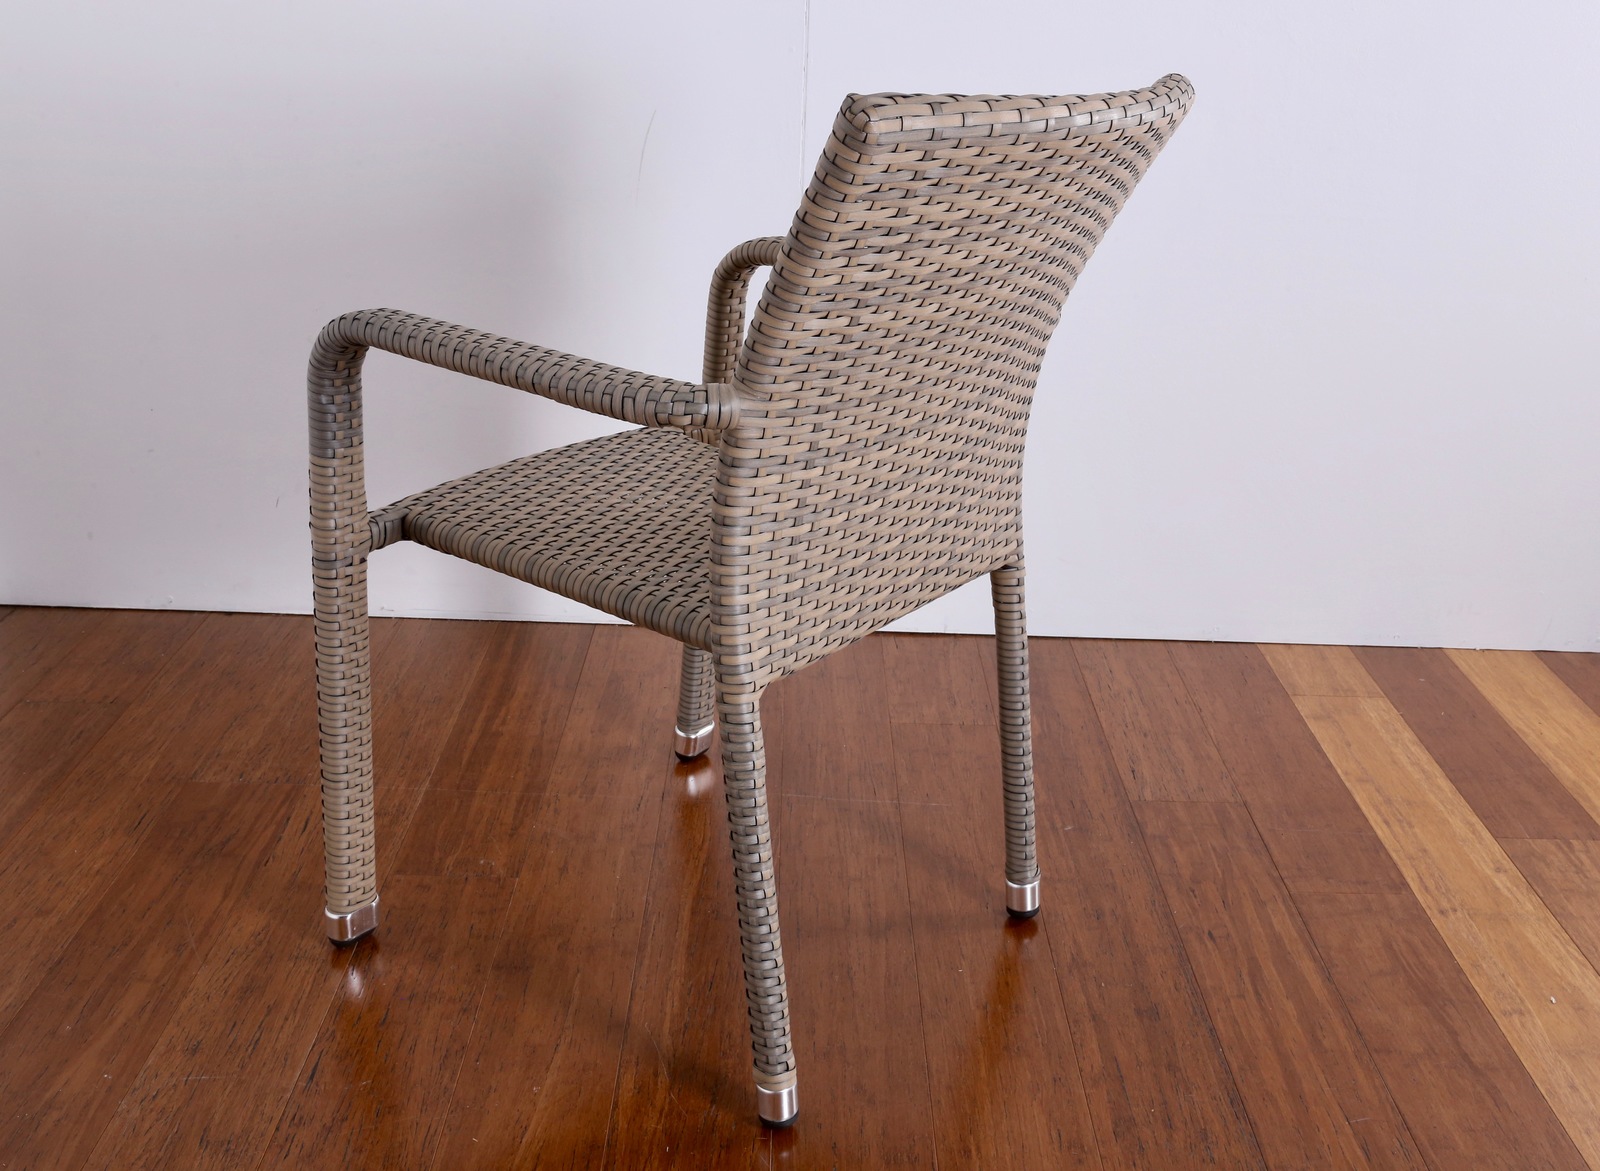 Rattan Wicker Dining Chairs Australia - Simply Beautiful House: Wicker